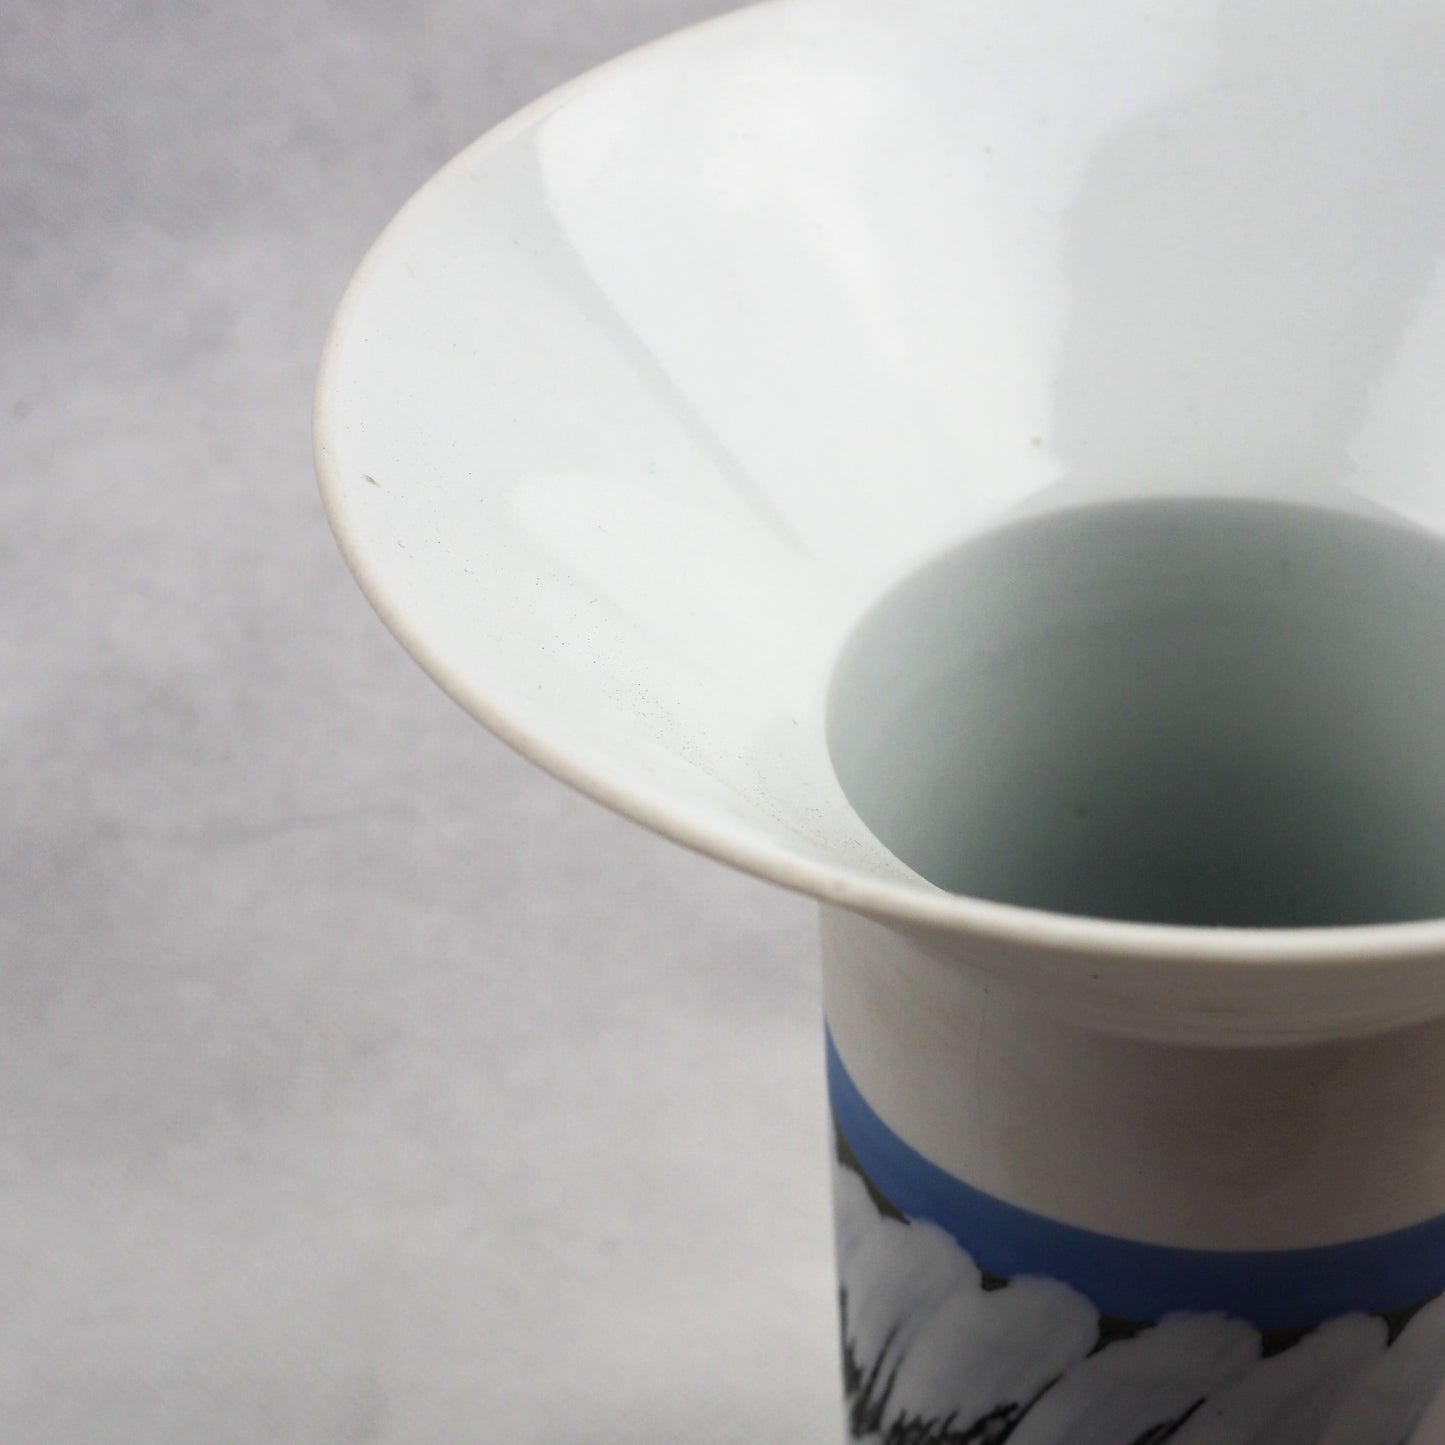 Les Blakebrough – Porcelain Vessel | Les Blakebrough | Primavera Gallery